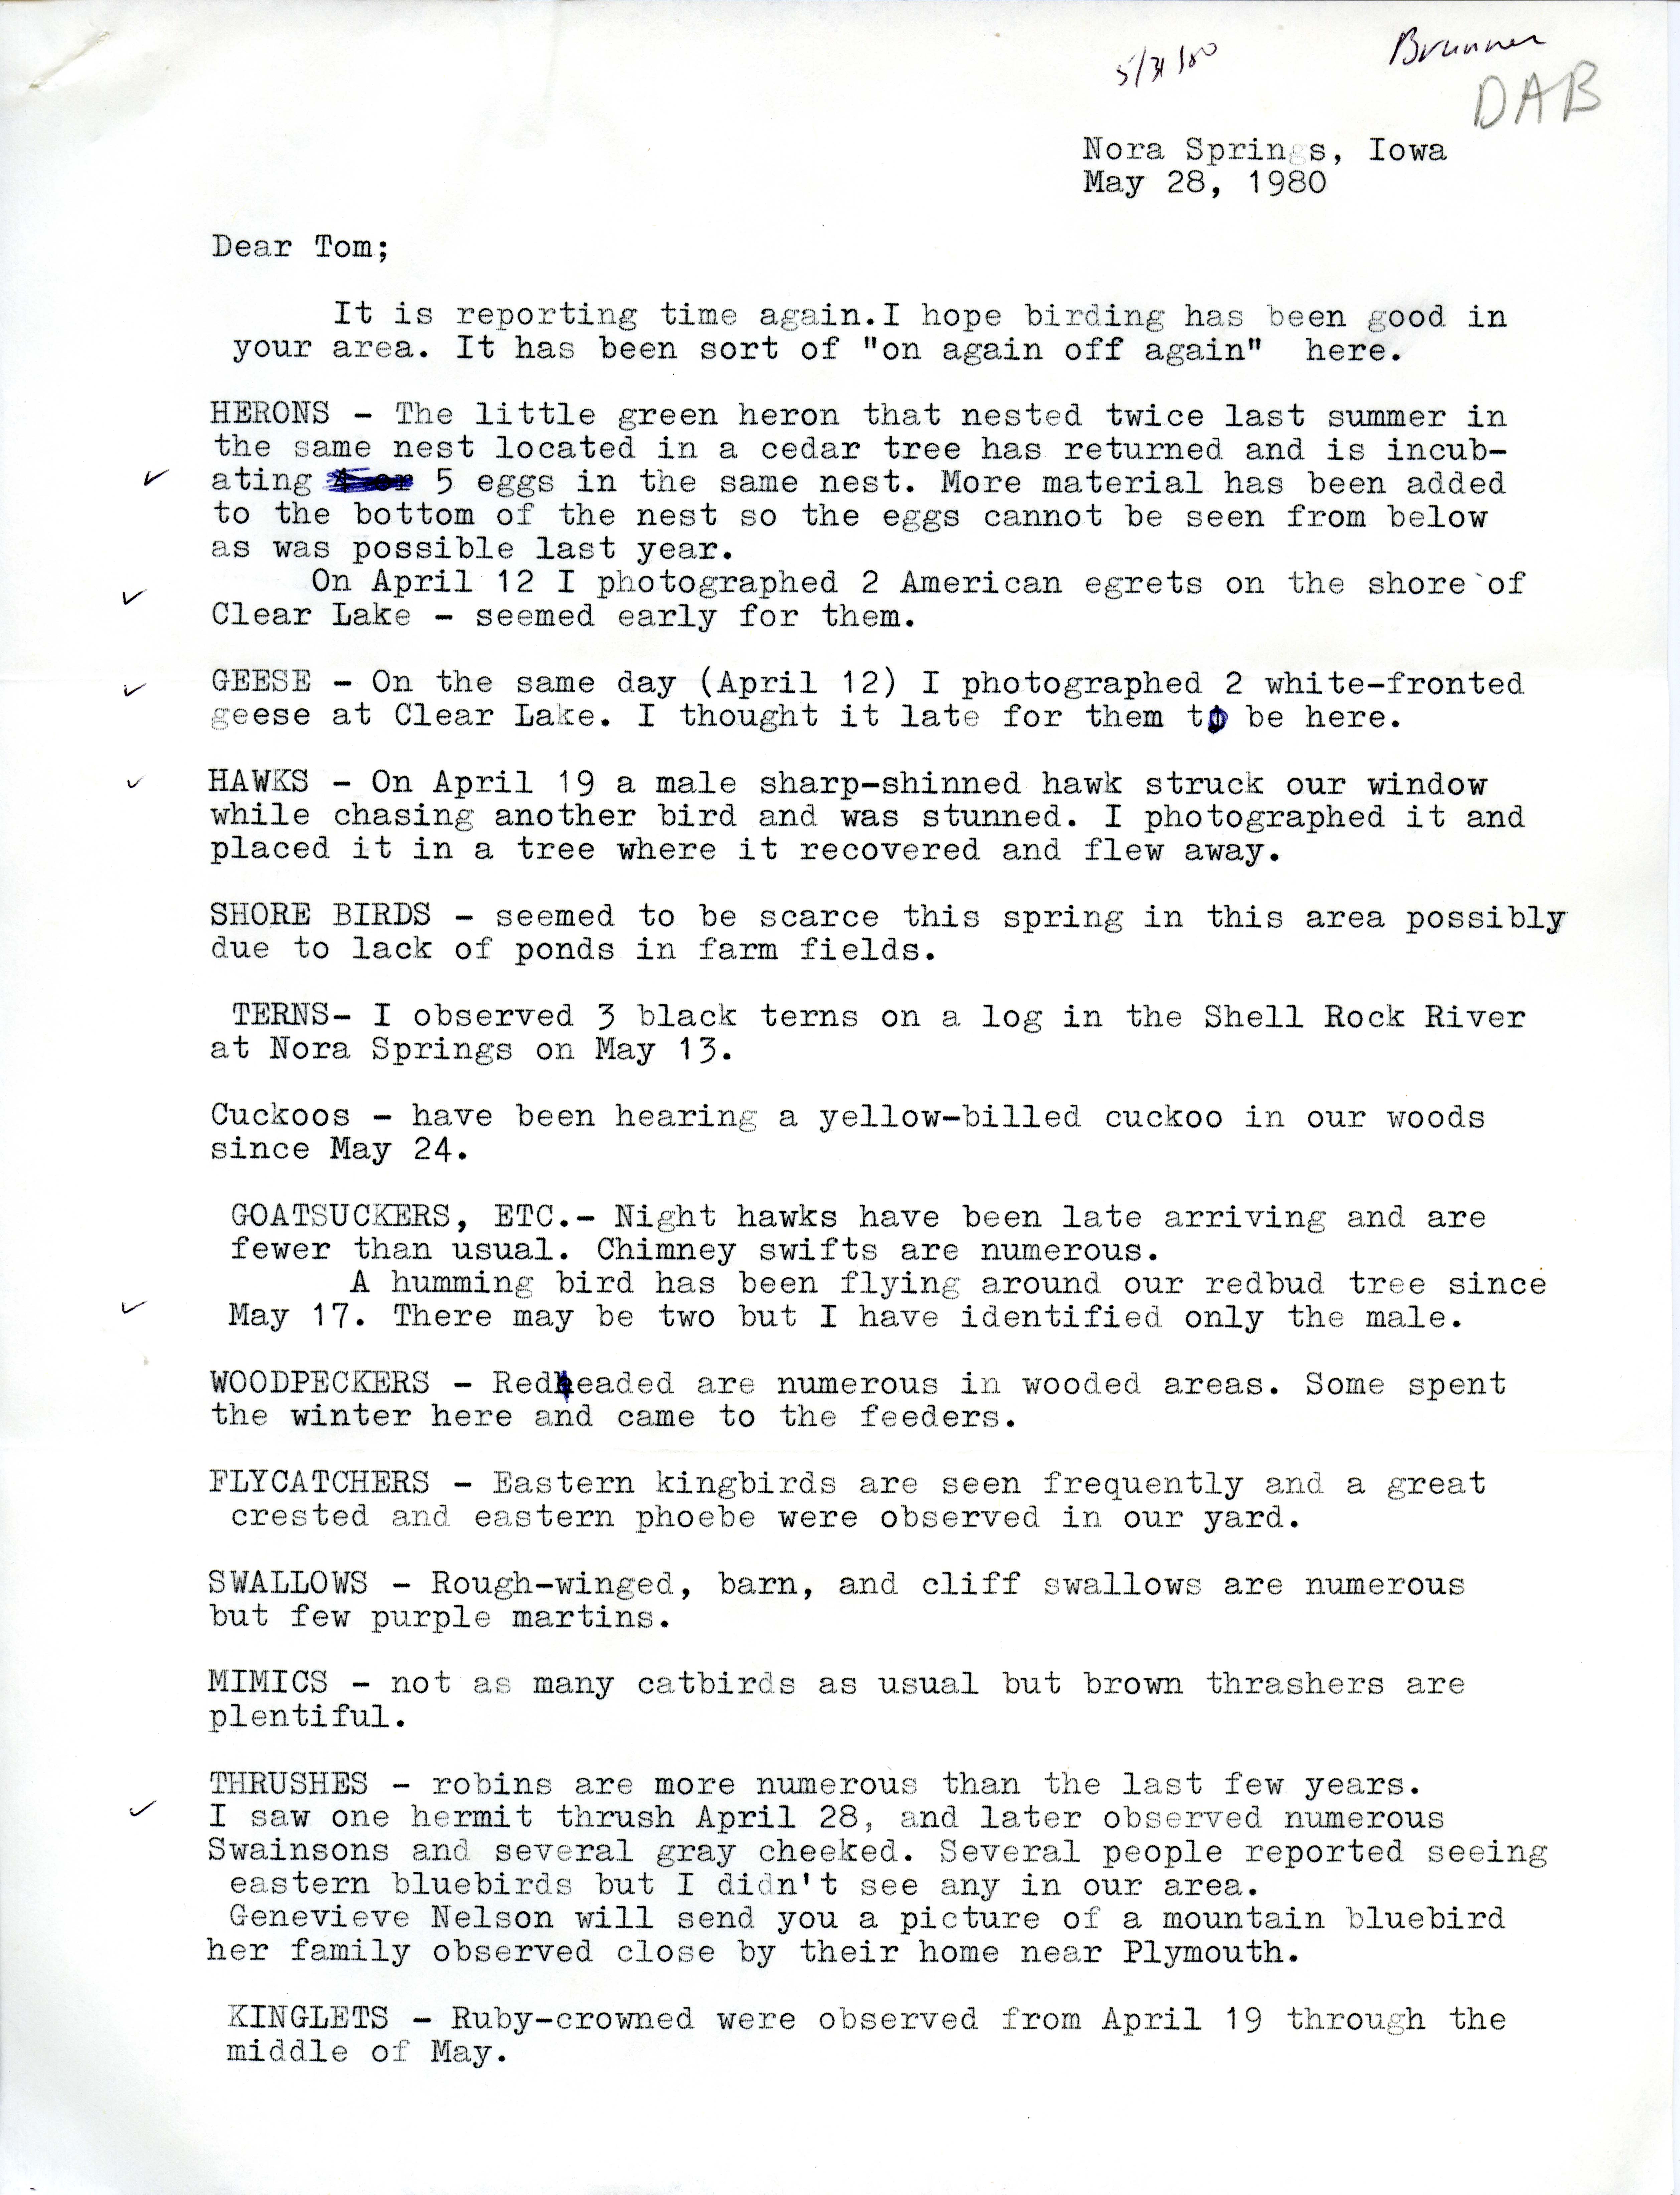 Dorothy A. Brunner letter to Thomas H. Kent regarding bird sightings, May 28, 1980